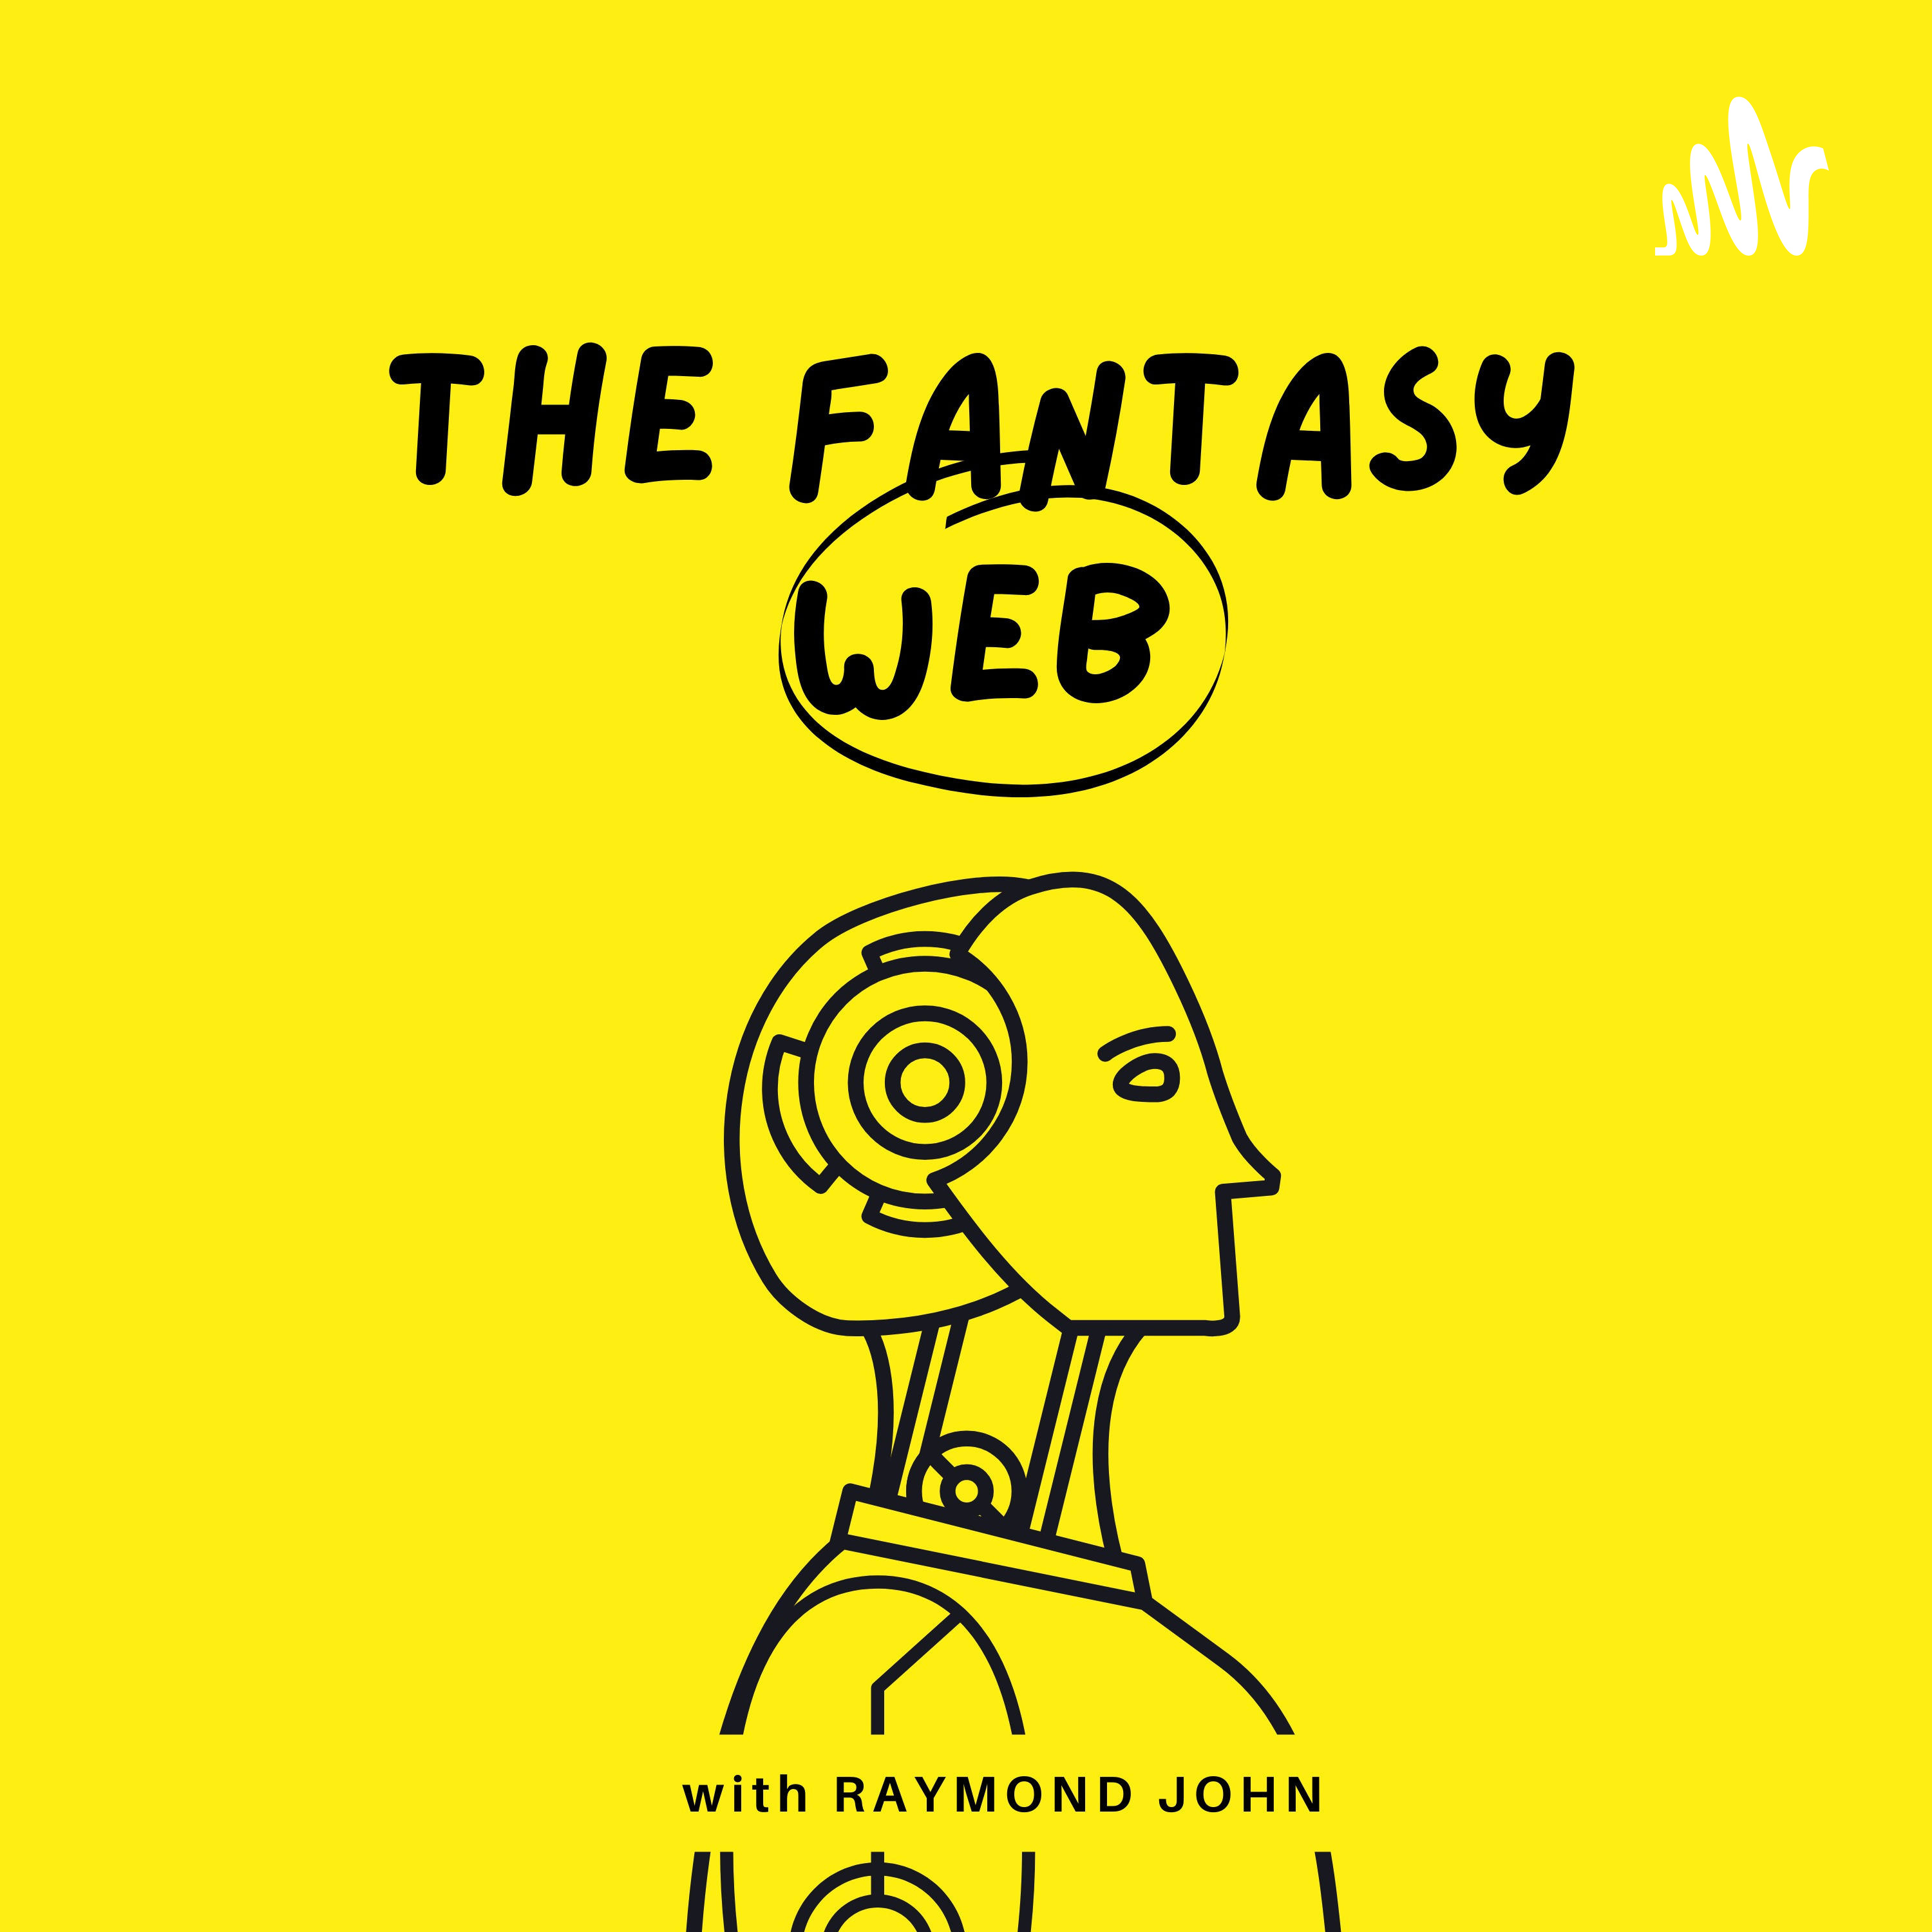 The Fantasy Web